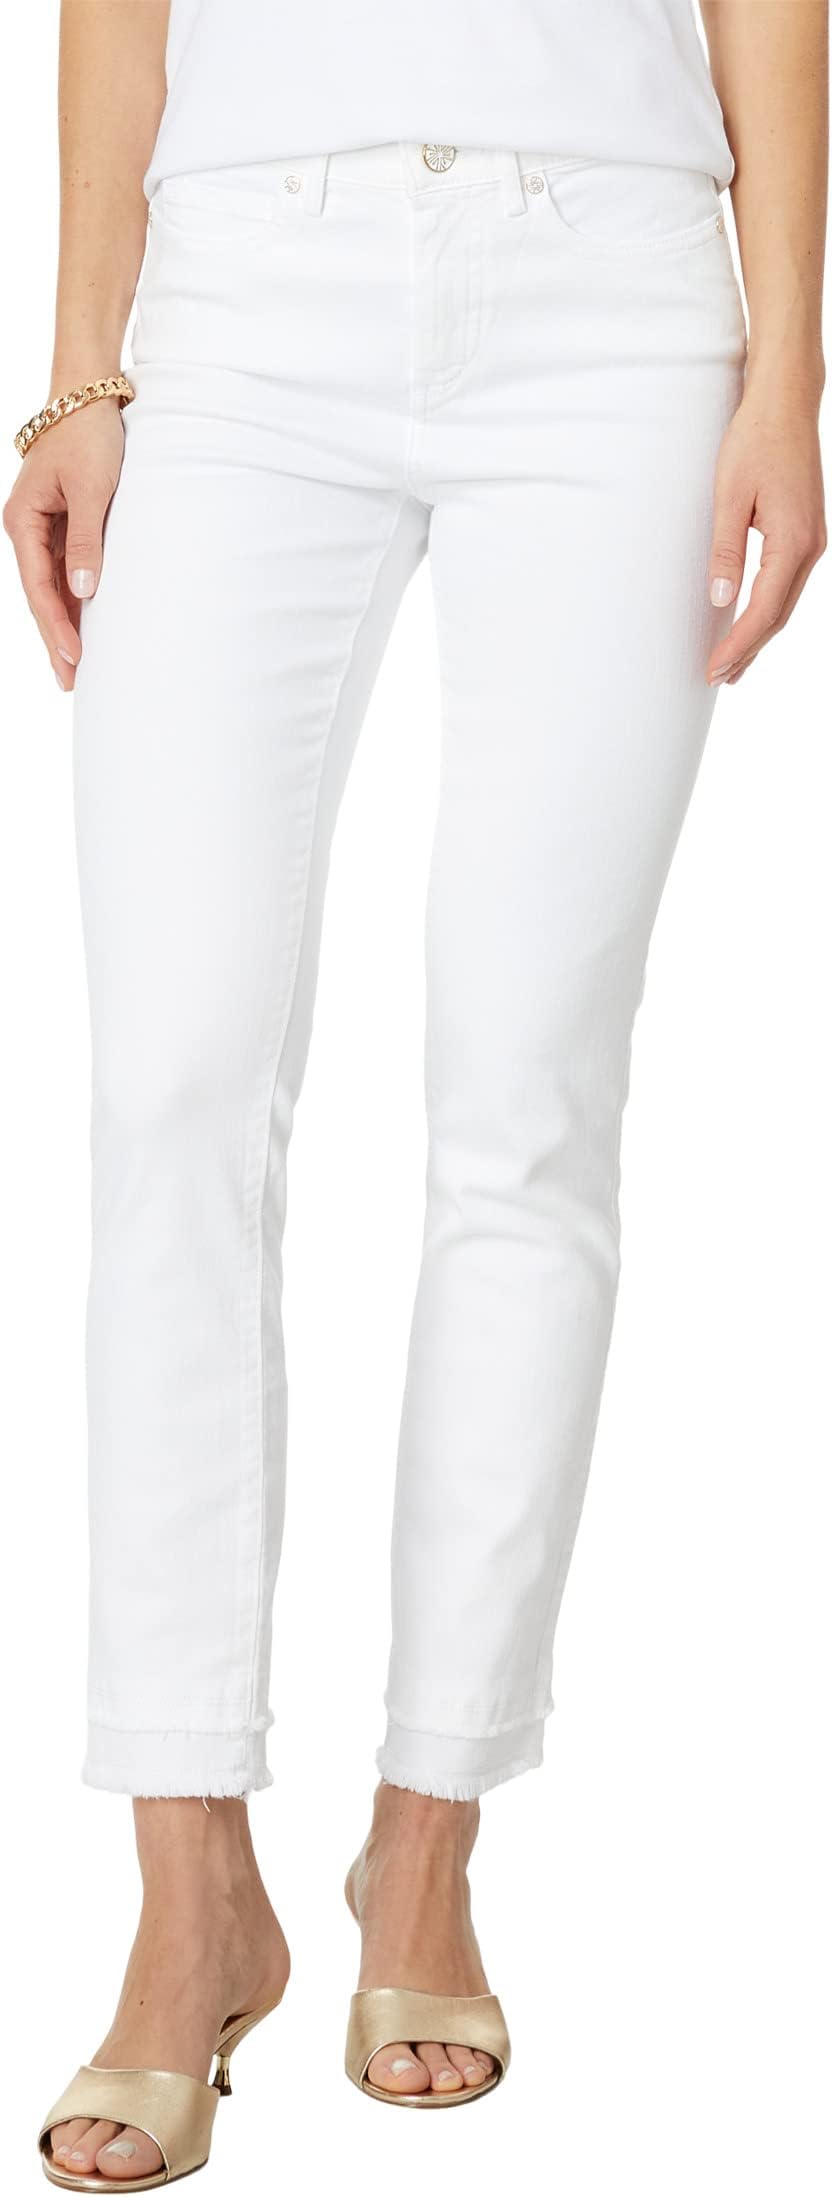 Джинсы South Ocean High-Rise Skinny Jeans in Resort White Lilly Pulitzer, цвет Resort White mantera resort